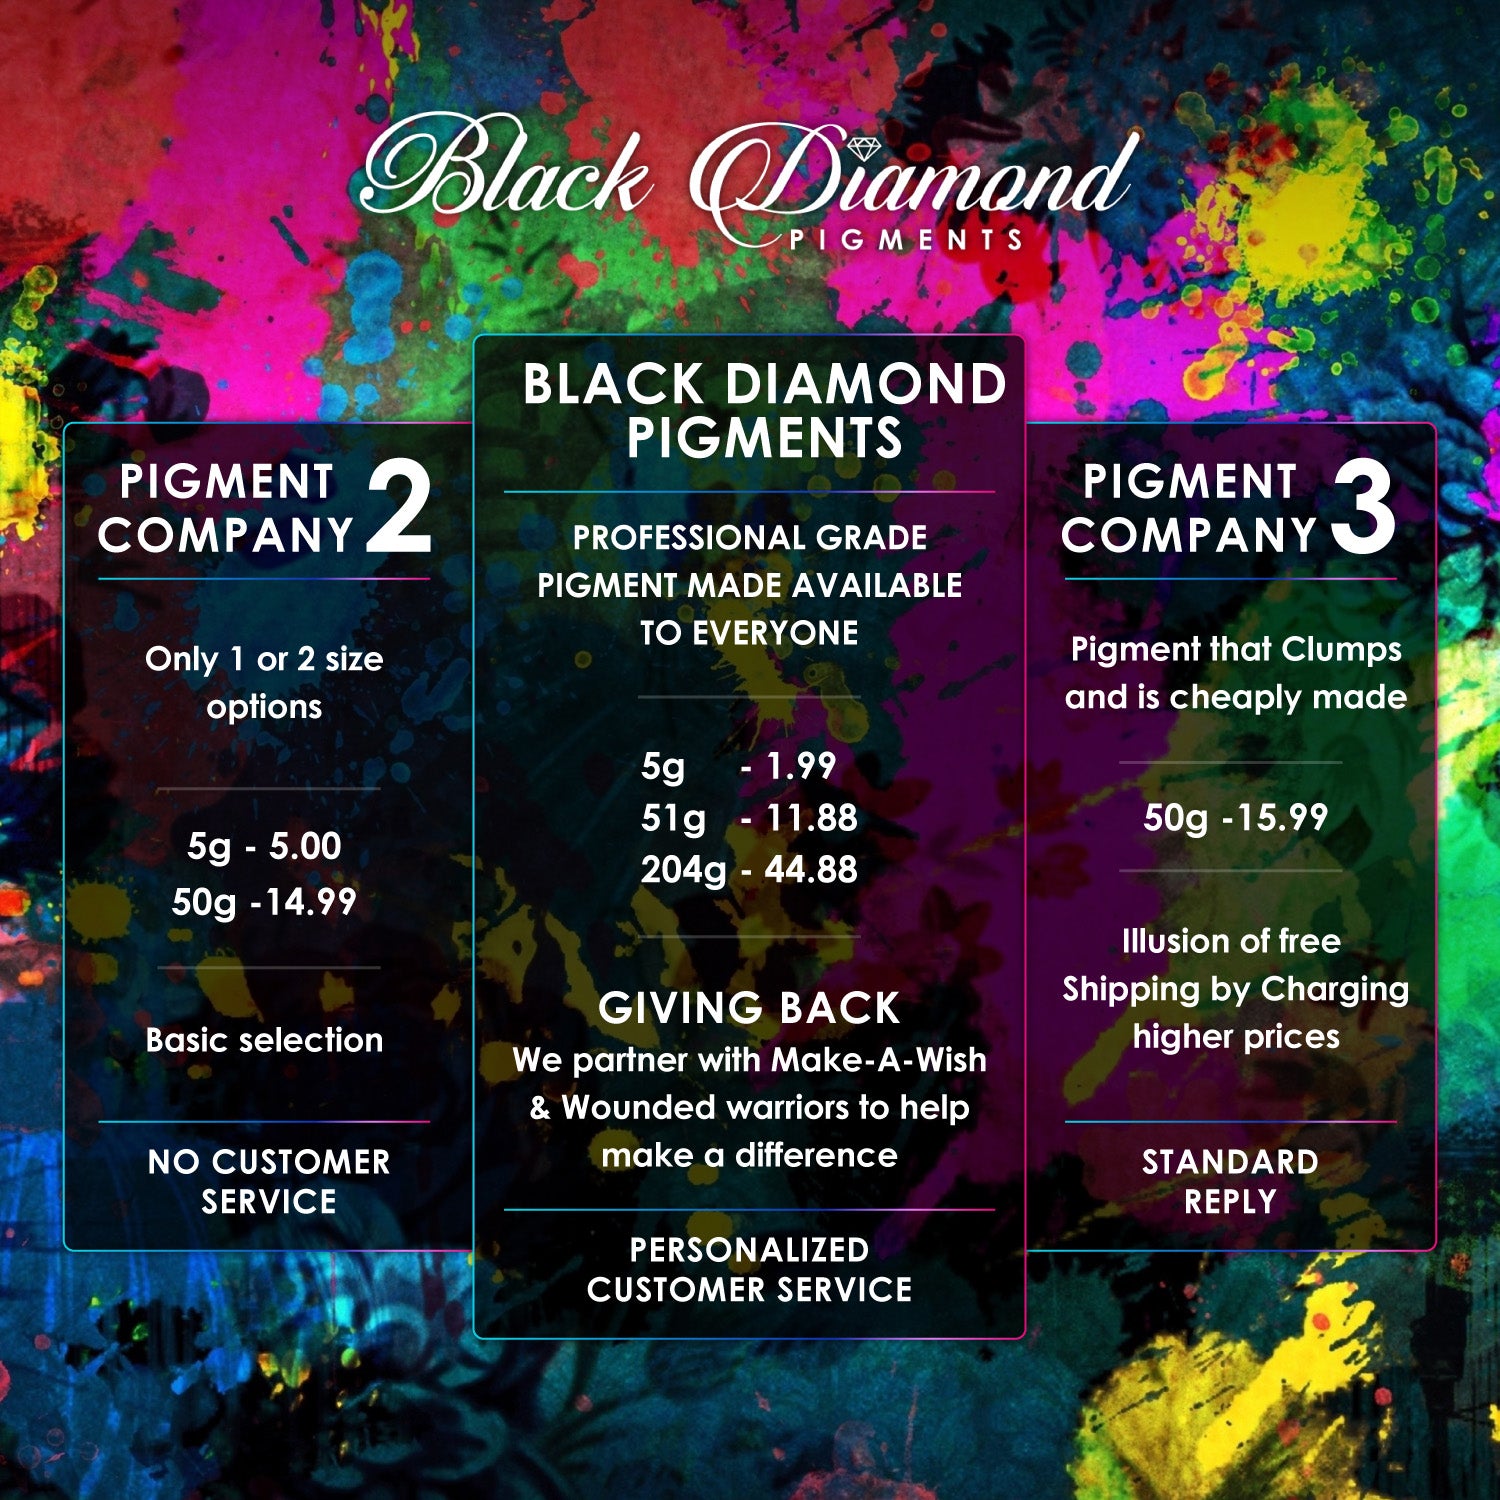 "MERLOT" Black Diamond Pigments